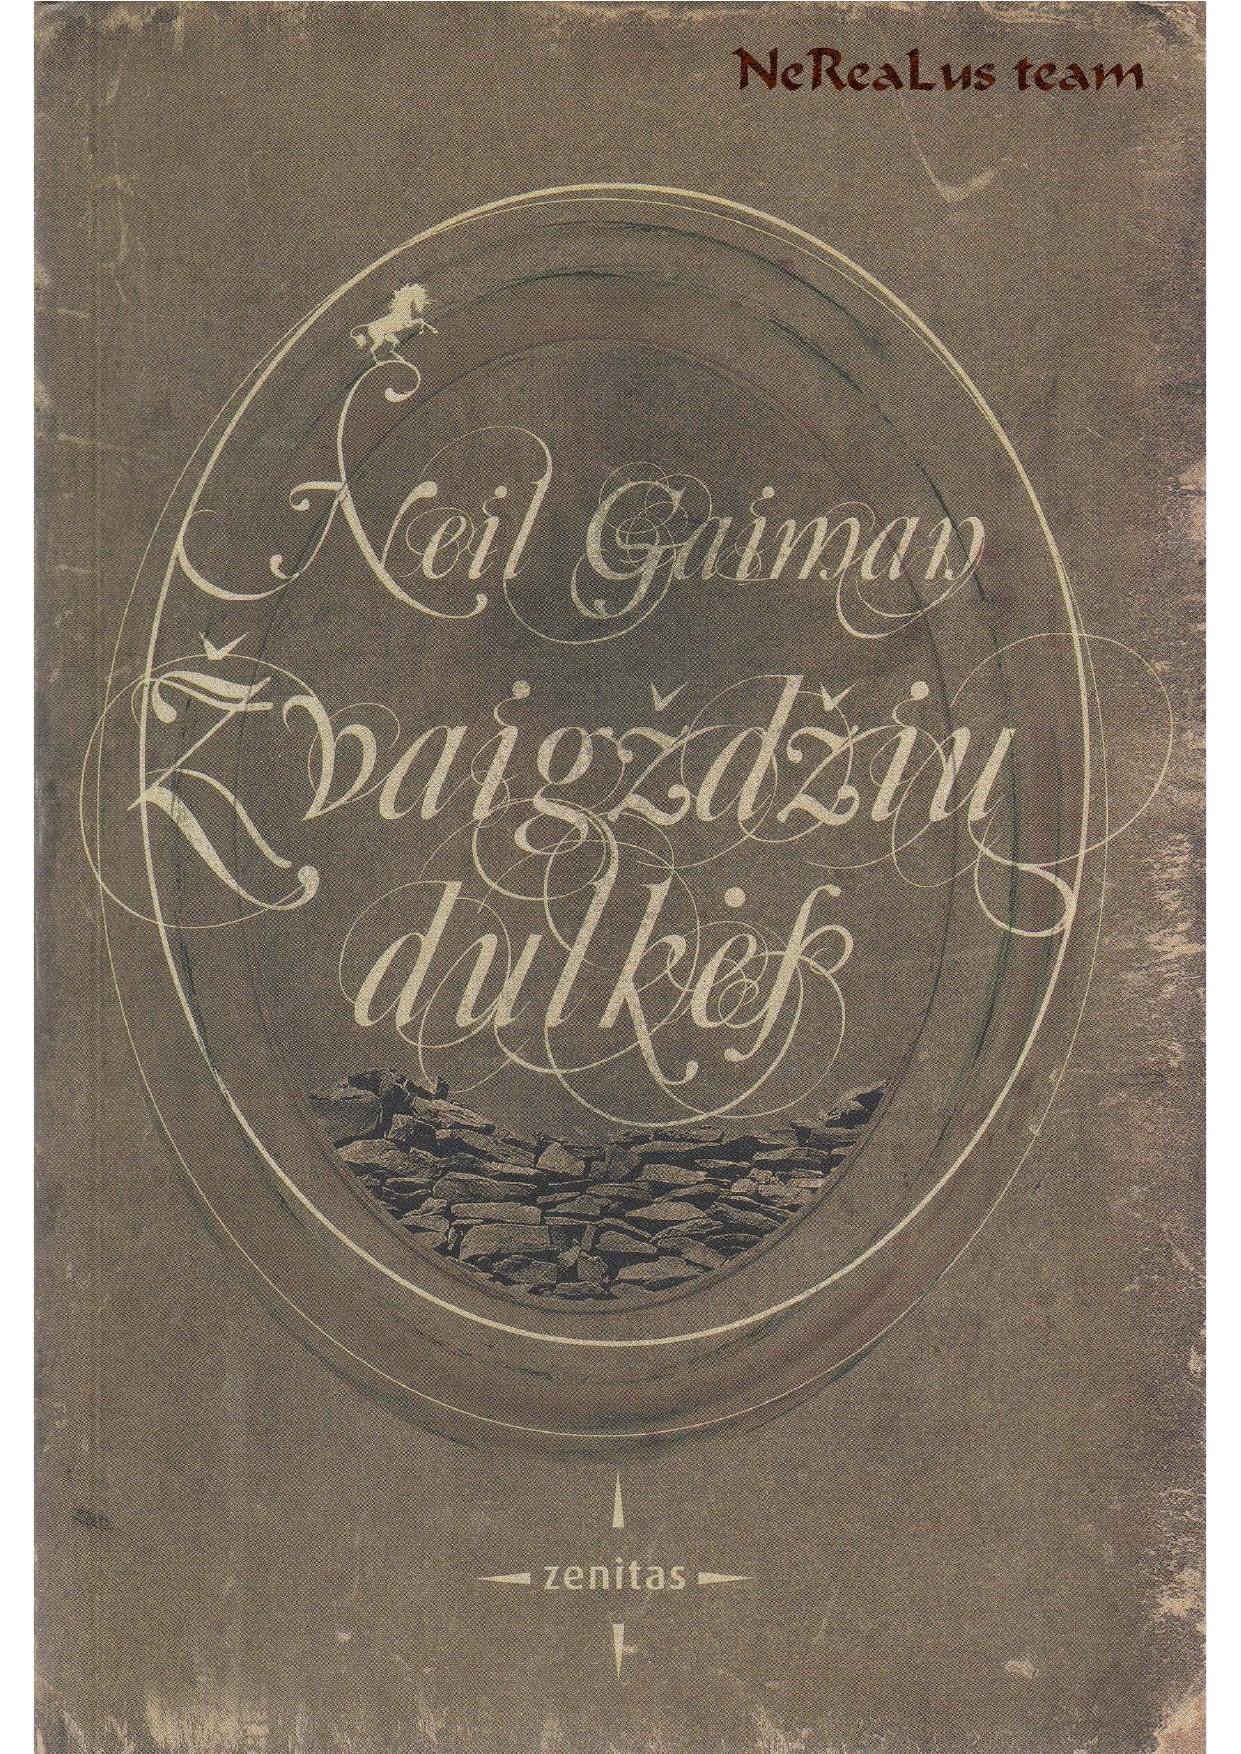 Neil Gaiman - Žaigždžių dulkės (2008) LT - NRL